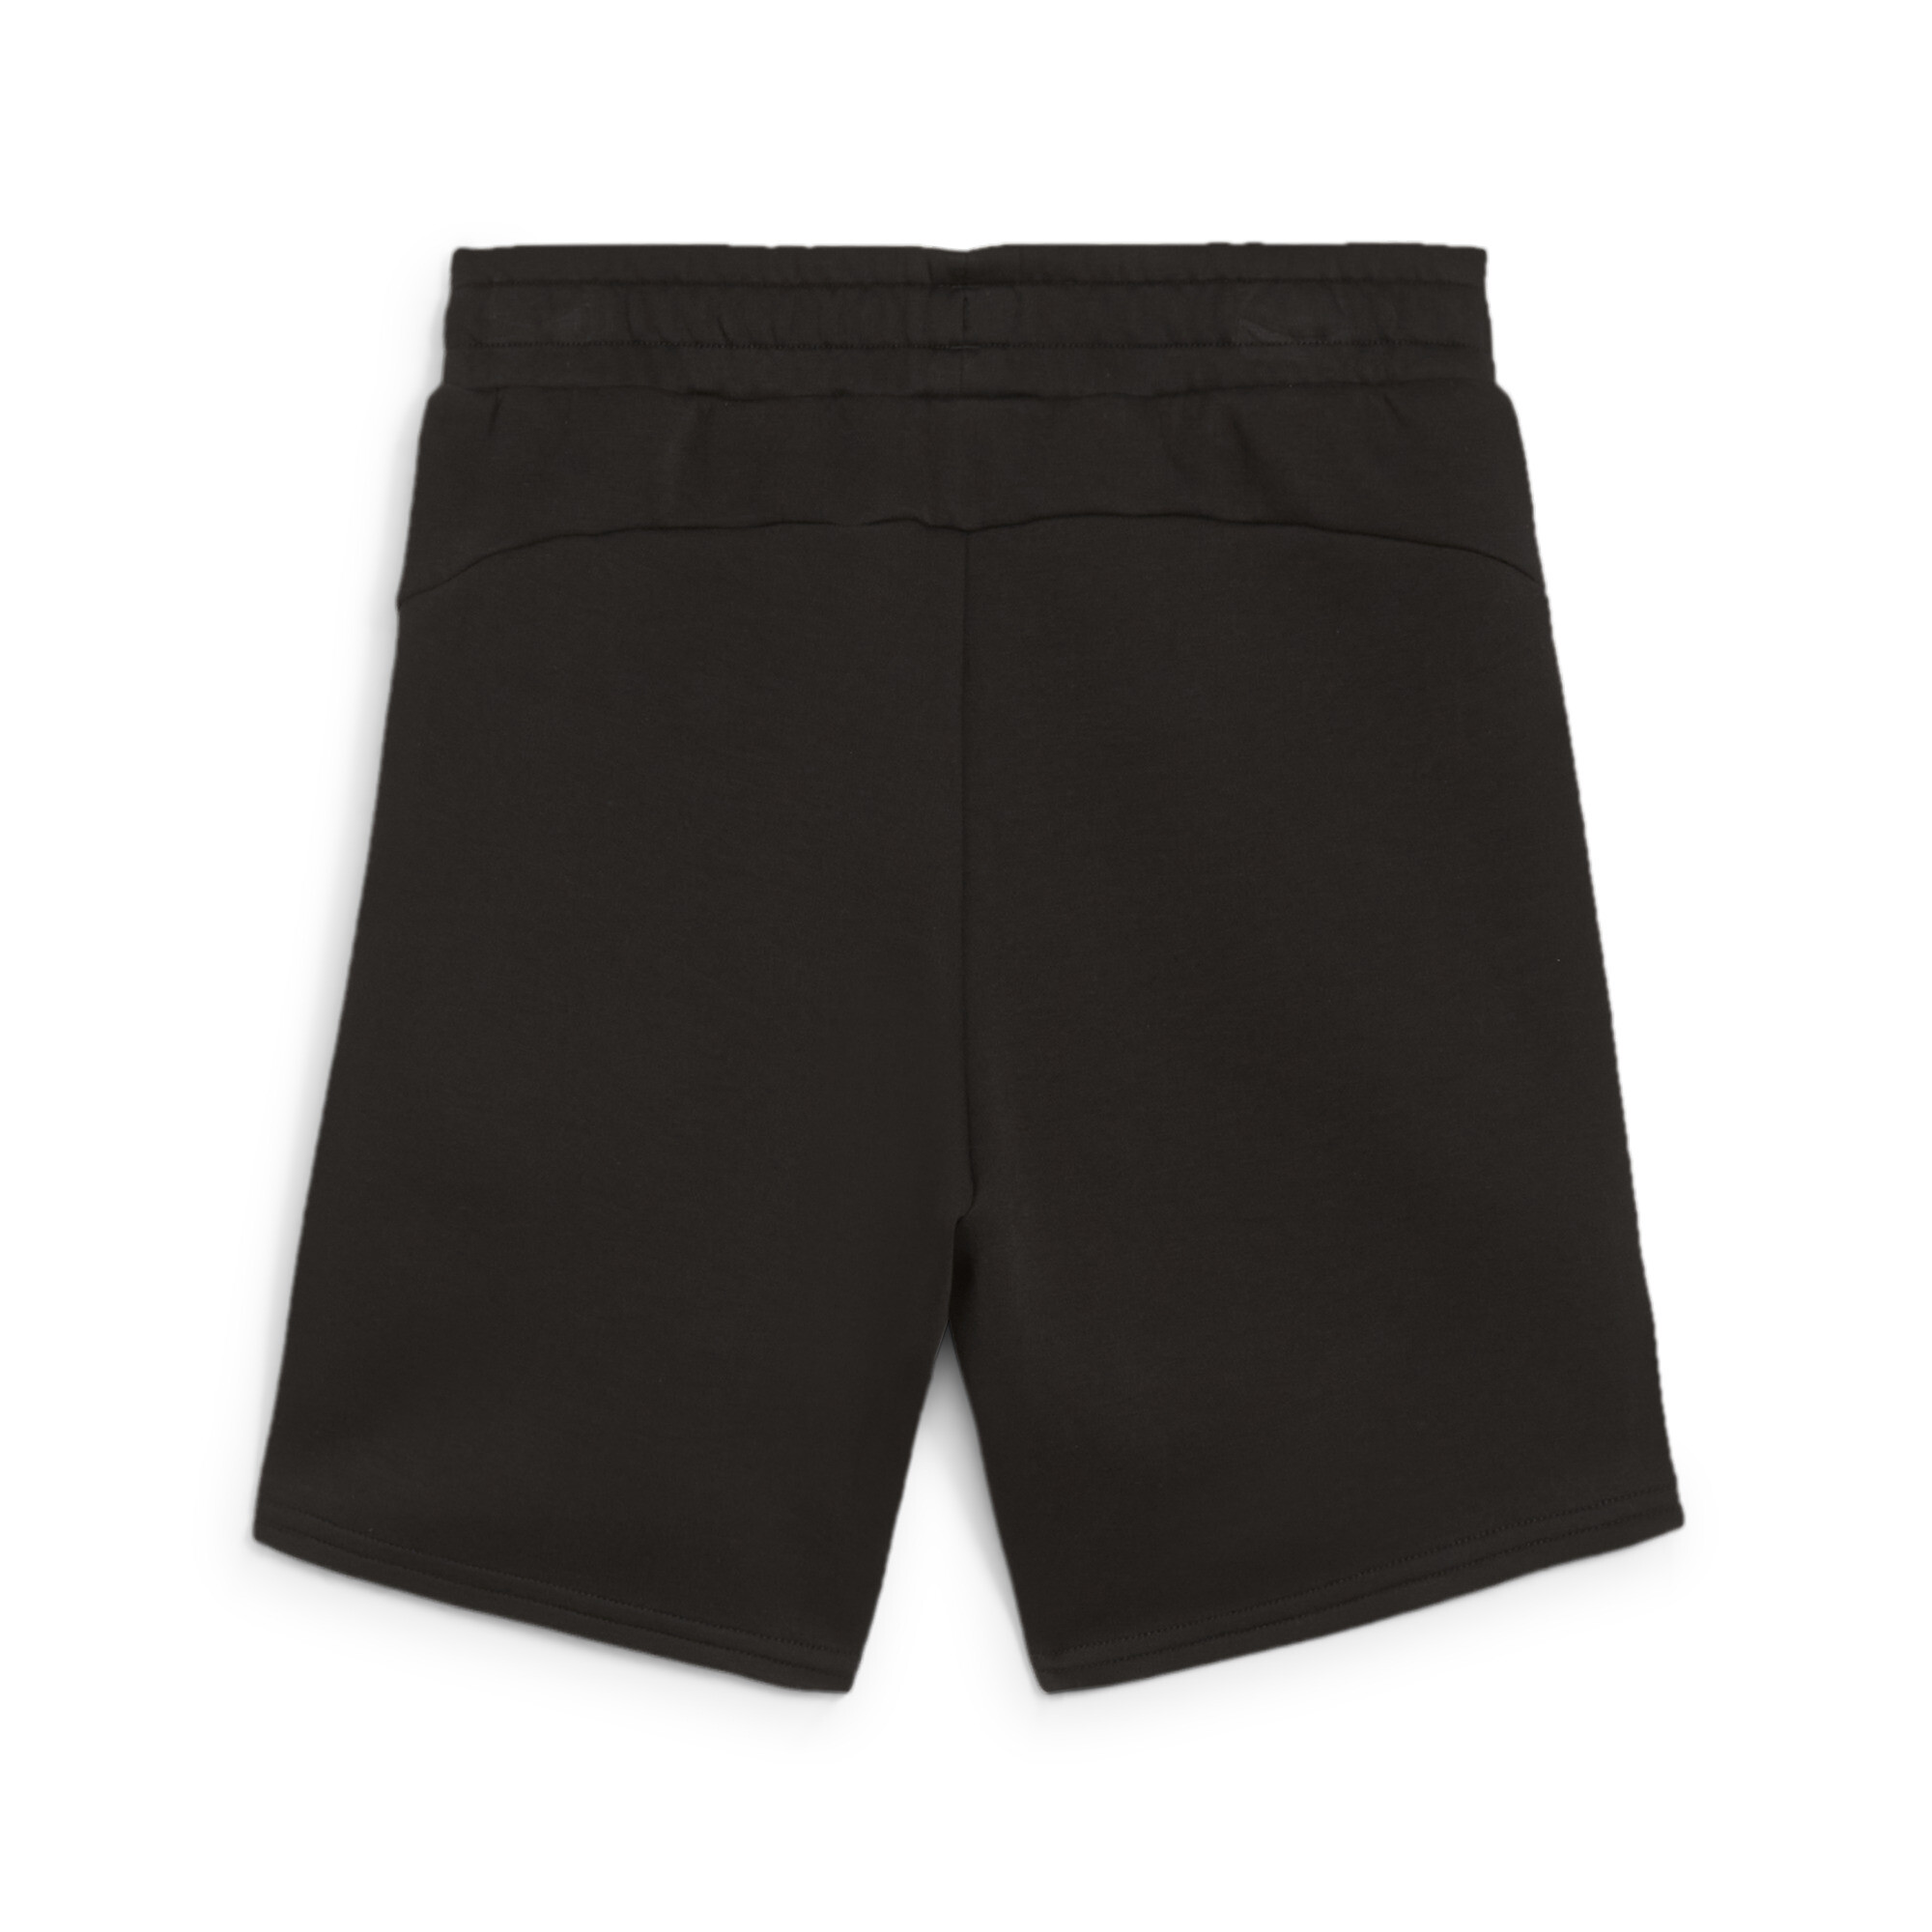 PUMA EVOSTRIPE Shorts In Black, Size 7-8 Youth